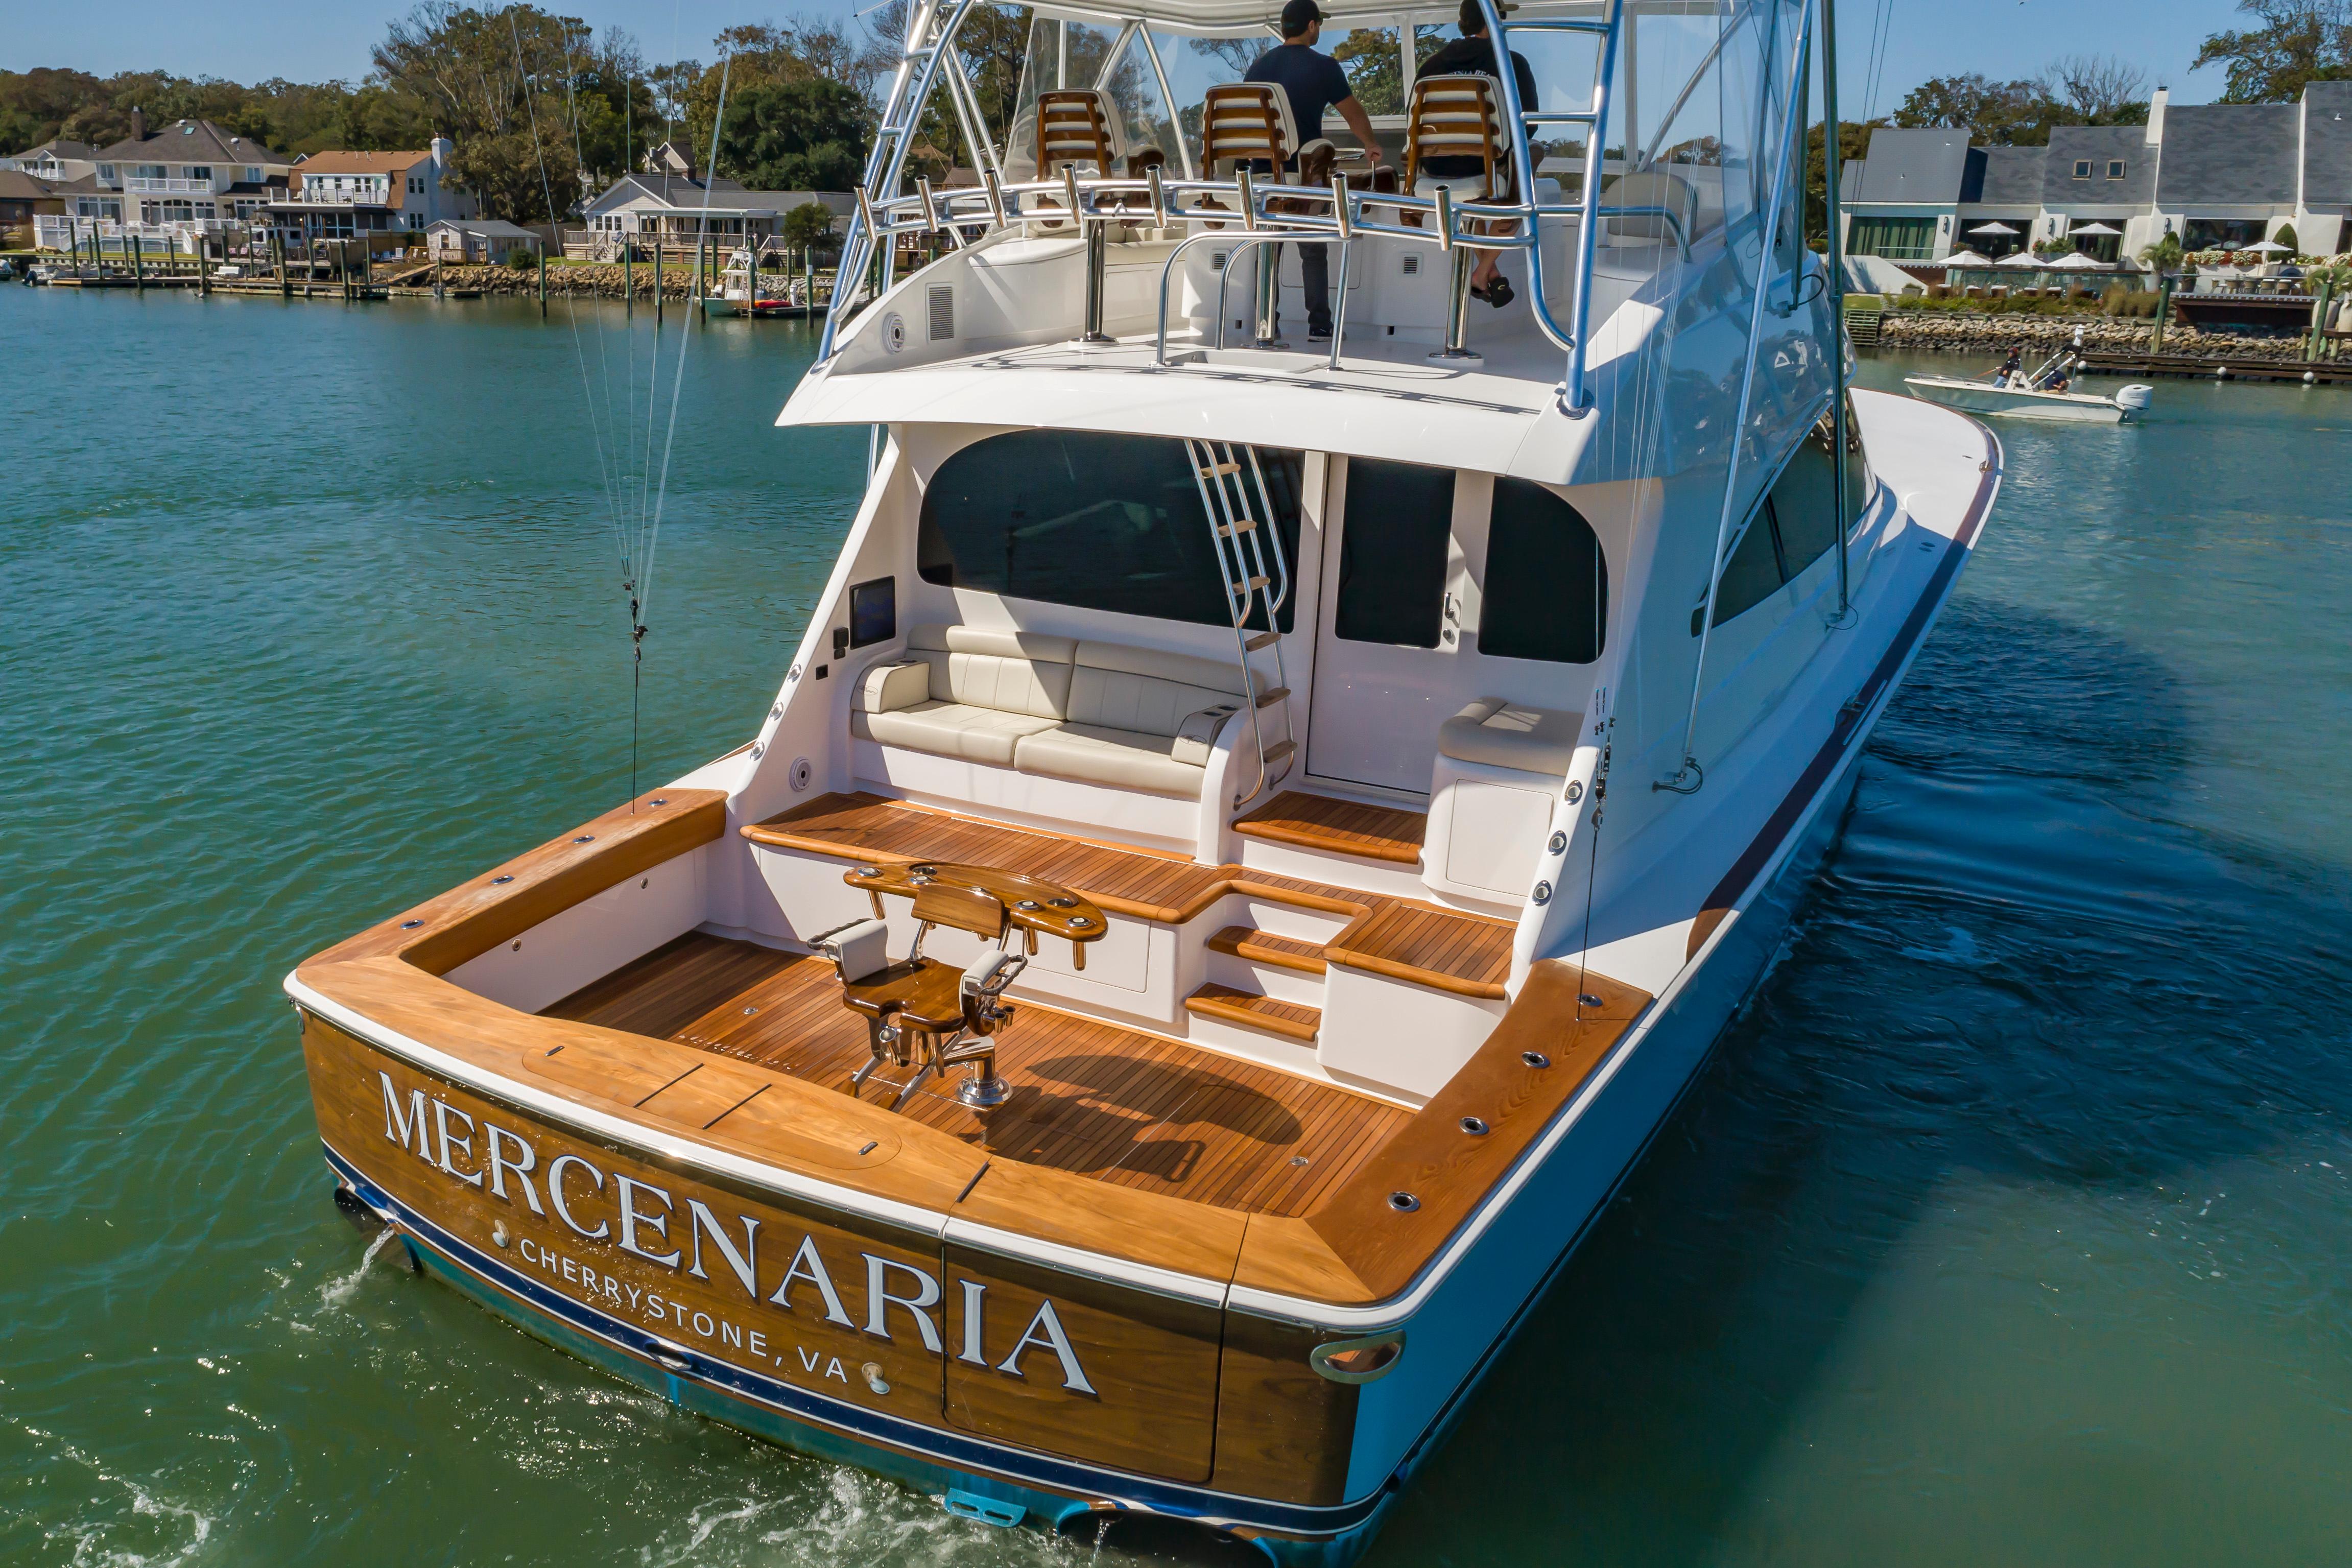 Mercenaria Yacht for Sale, 73 Viking Yachts Virginia Beach, VA